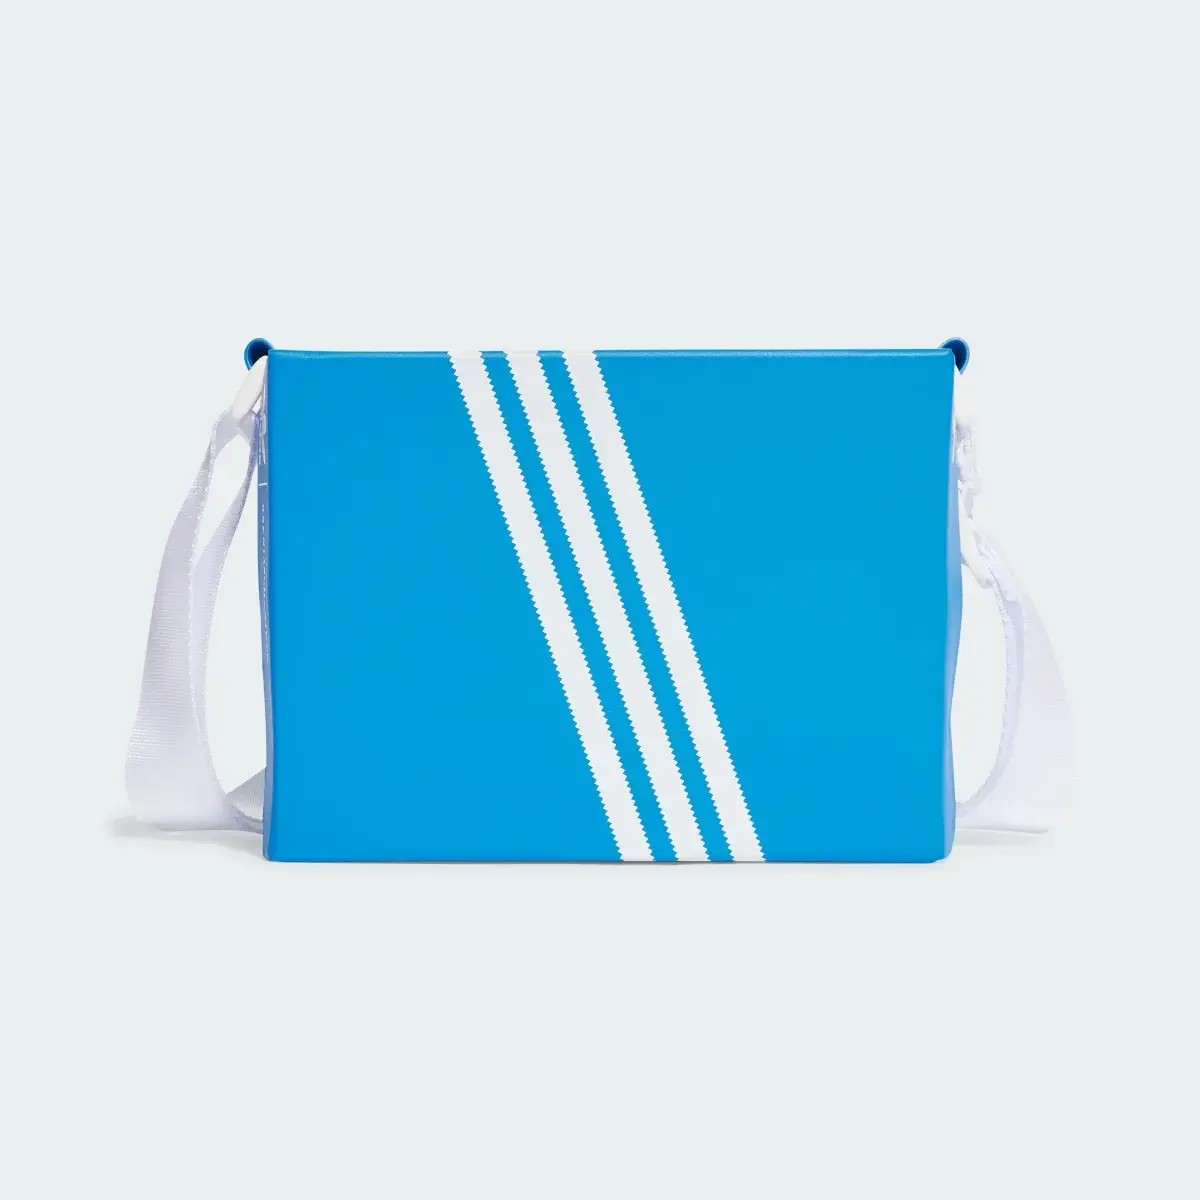 Adidas Originals x KSENIASCHNAIDER Shoebox Bag. 2